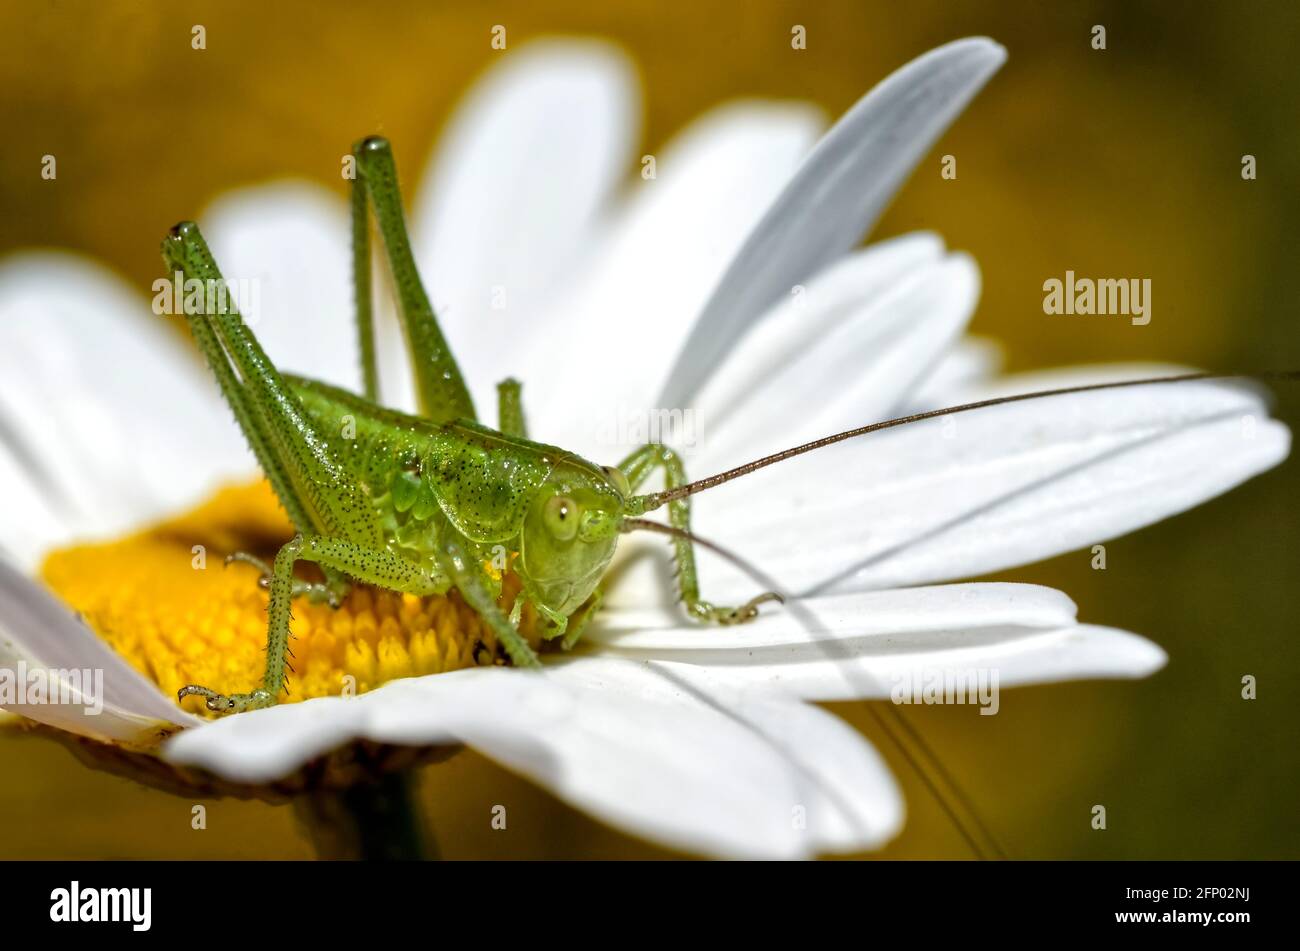 Macro conehead cricket on daisy flower (genus Conocephalus) Stock Photo